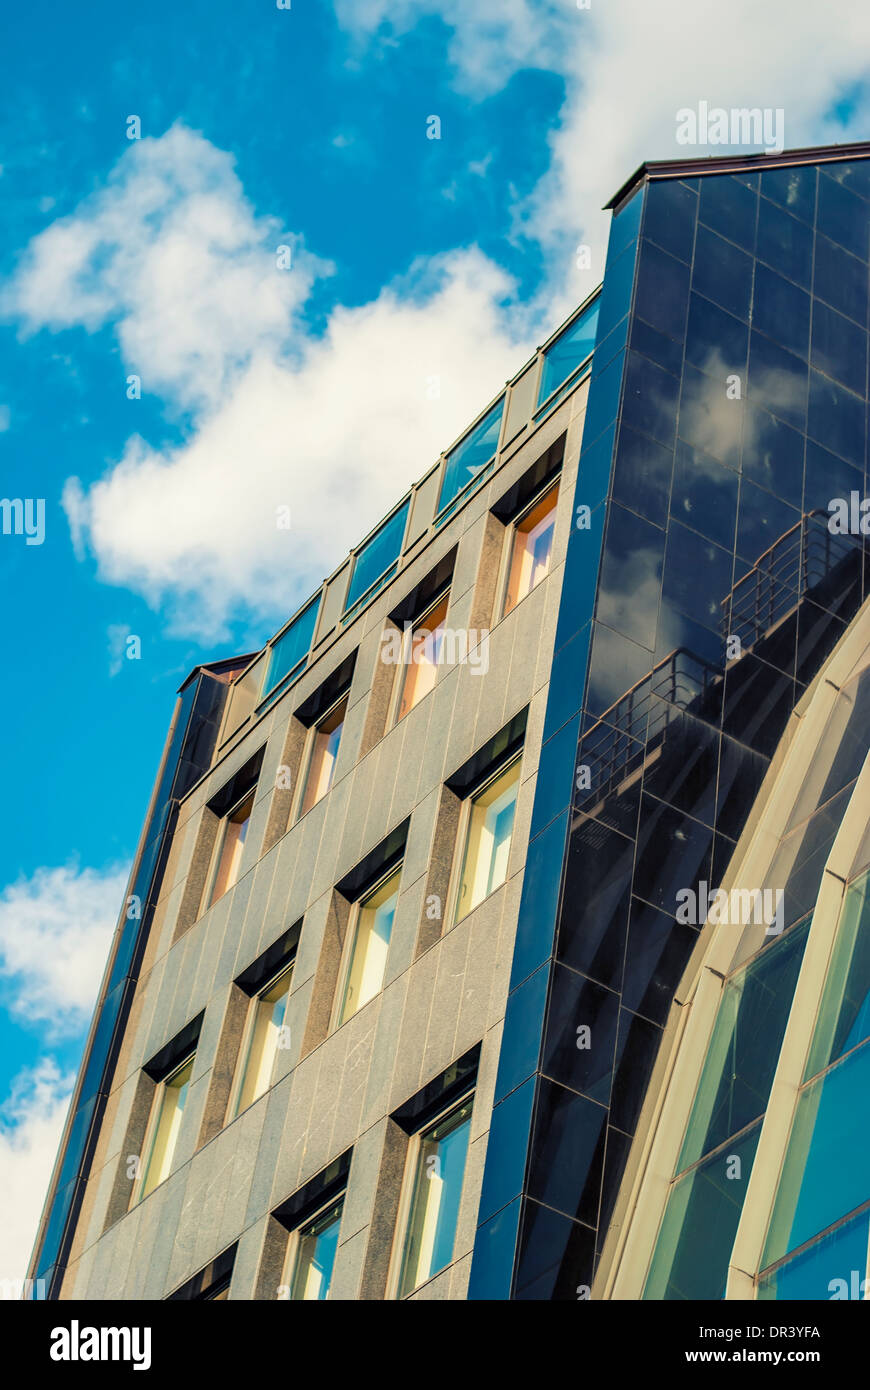 futuristic building with mirrored facade in blue Stock Photo